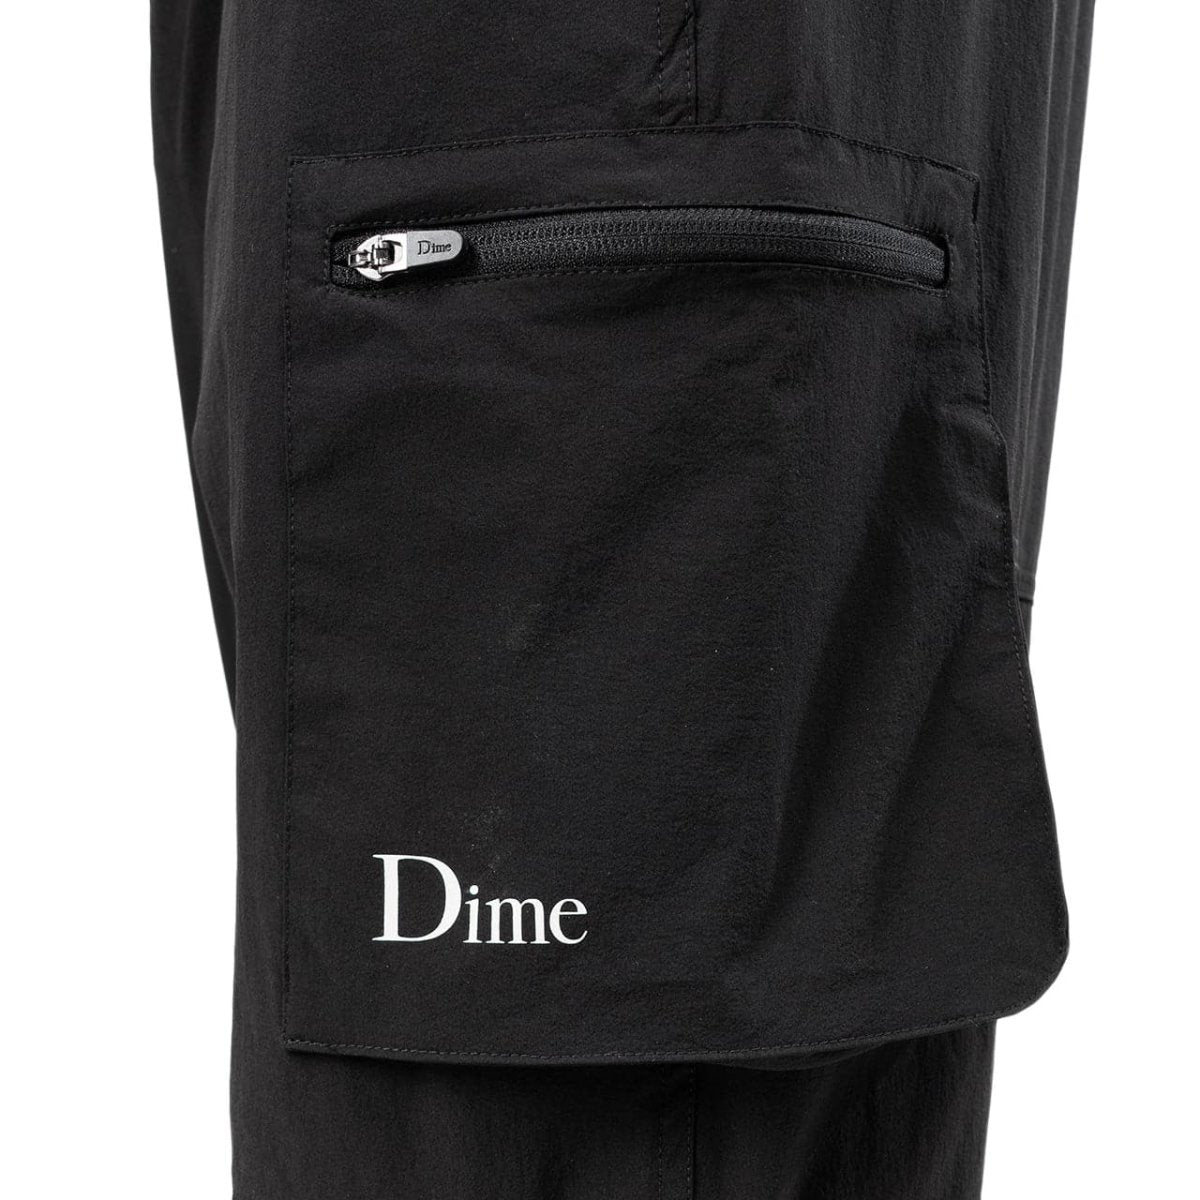 Dime Range Pants (Schwarz)  - Allike Store